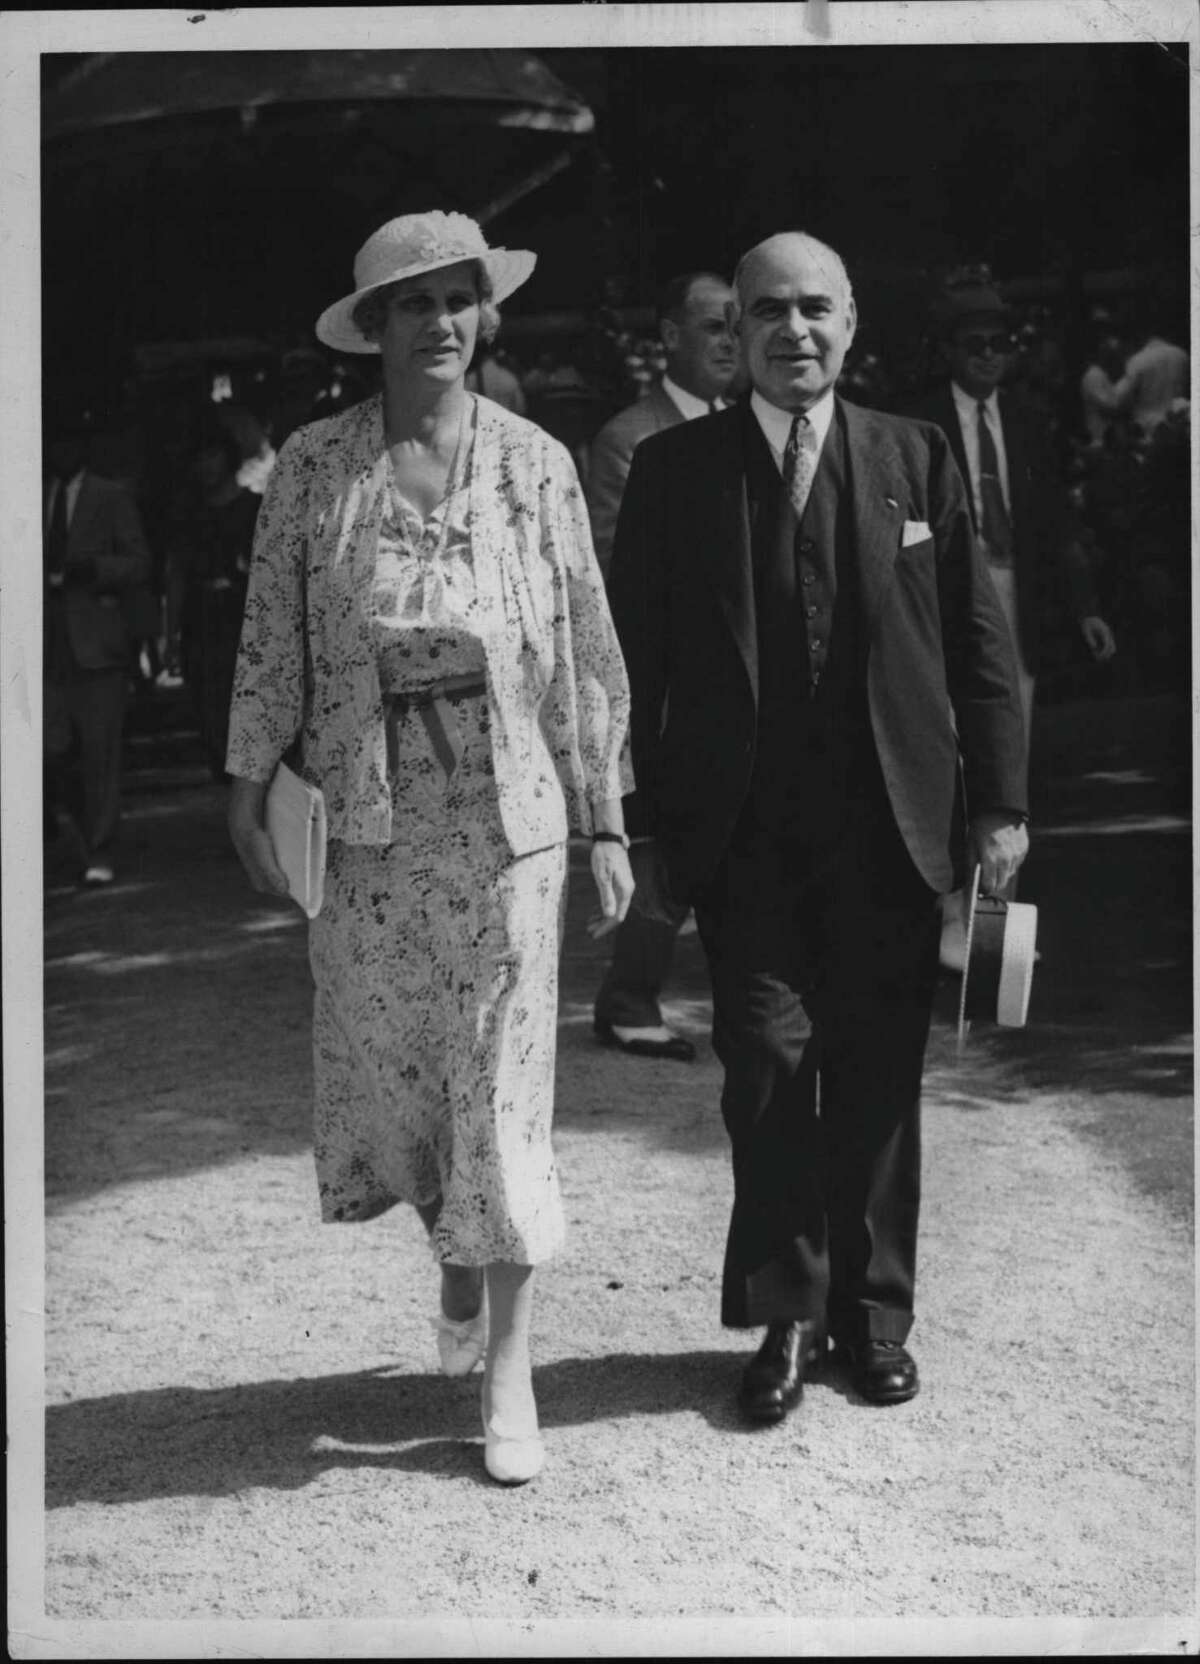 Governor & Mrs. Herbert Lehman in Saratoga, New York. Aug. 29, 1935.